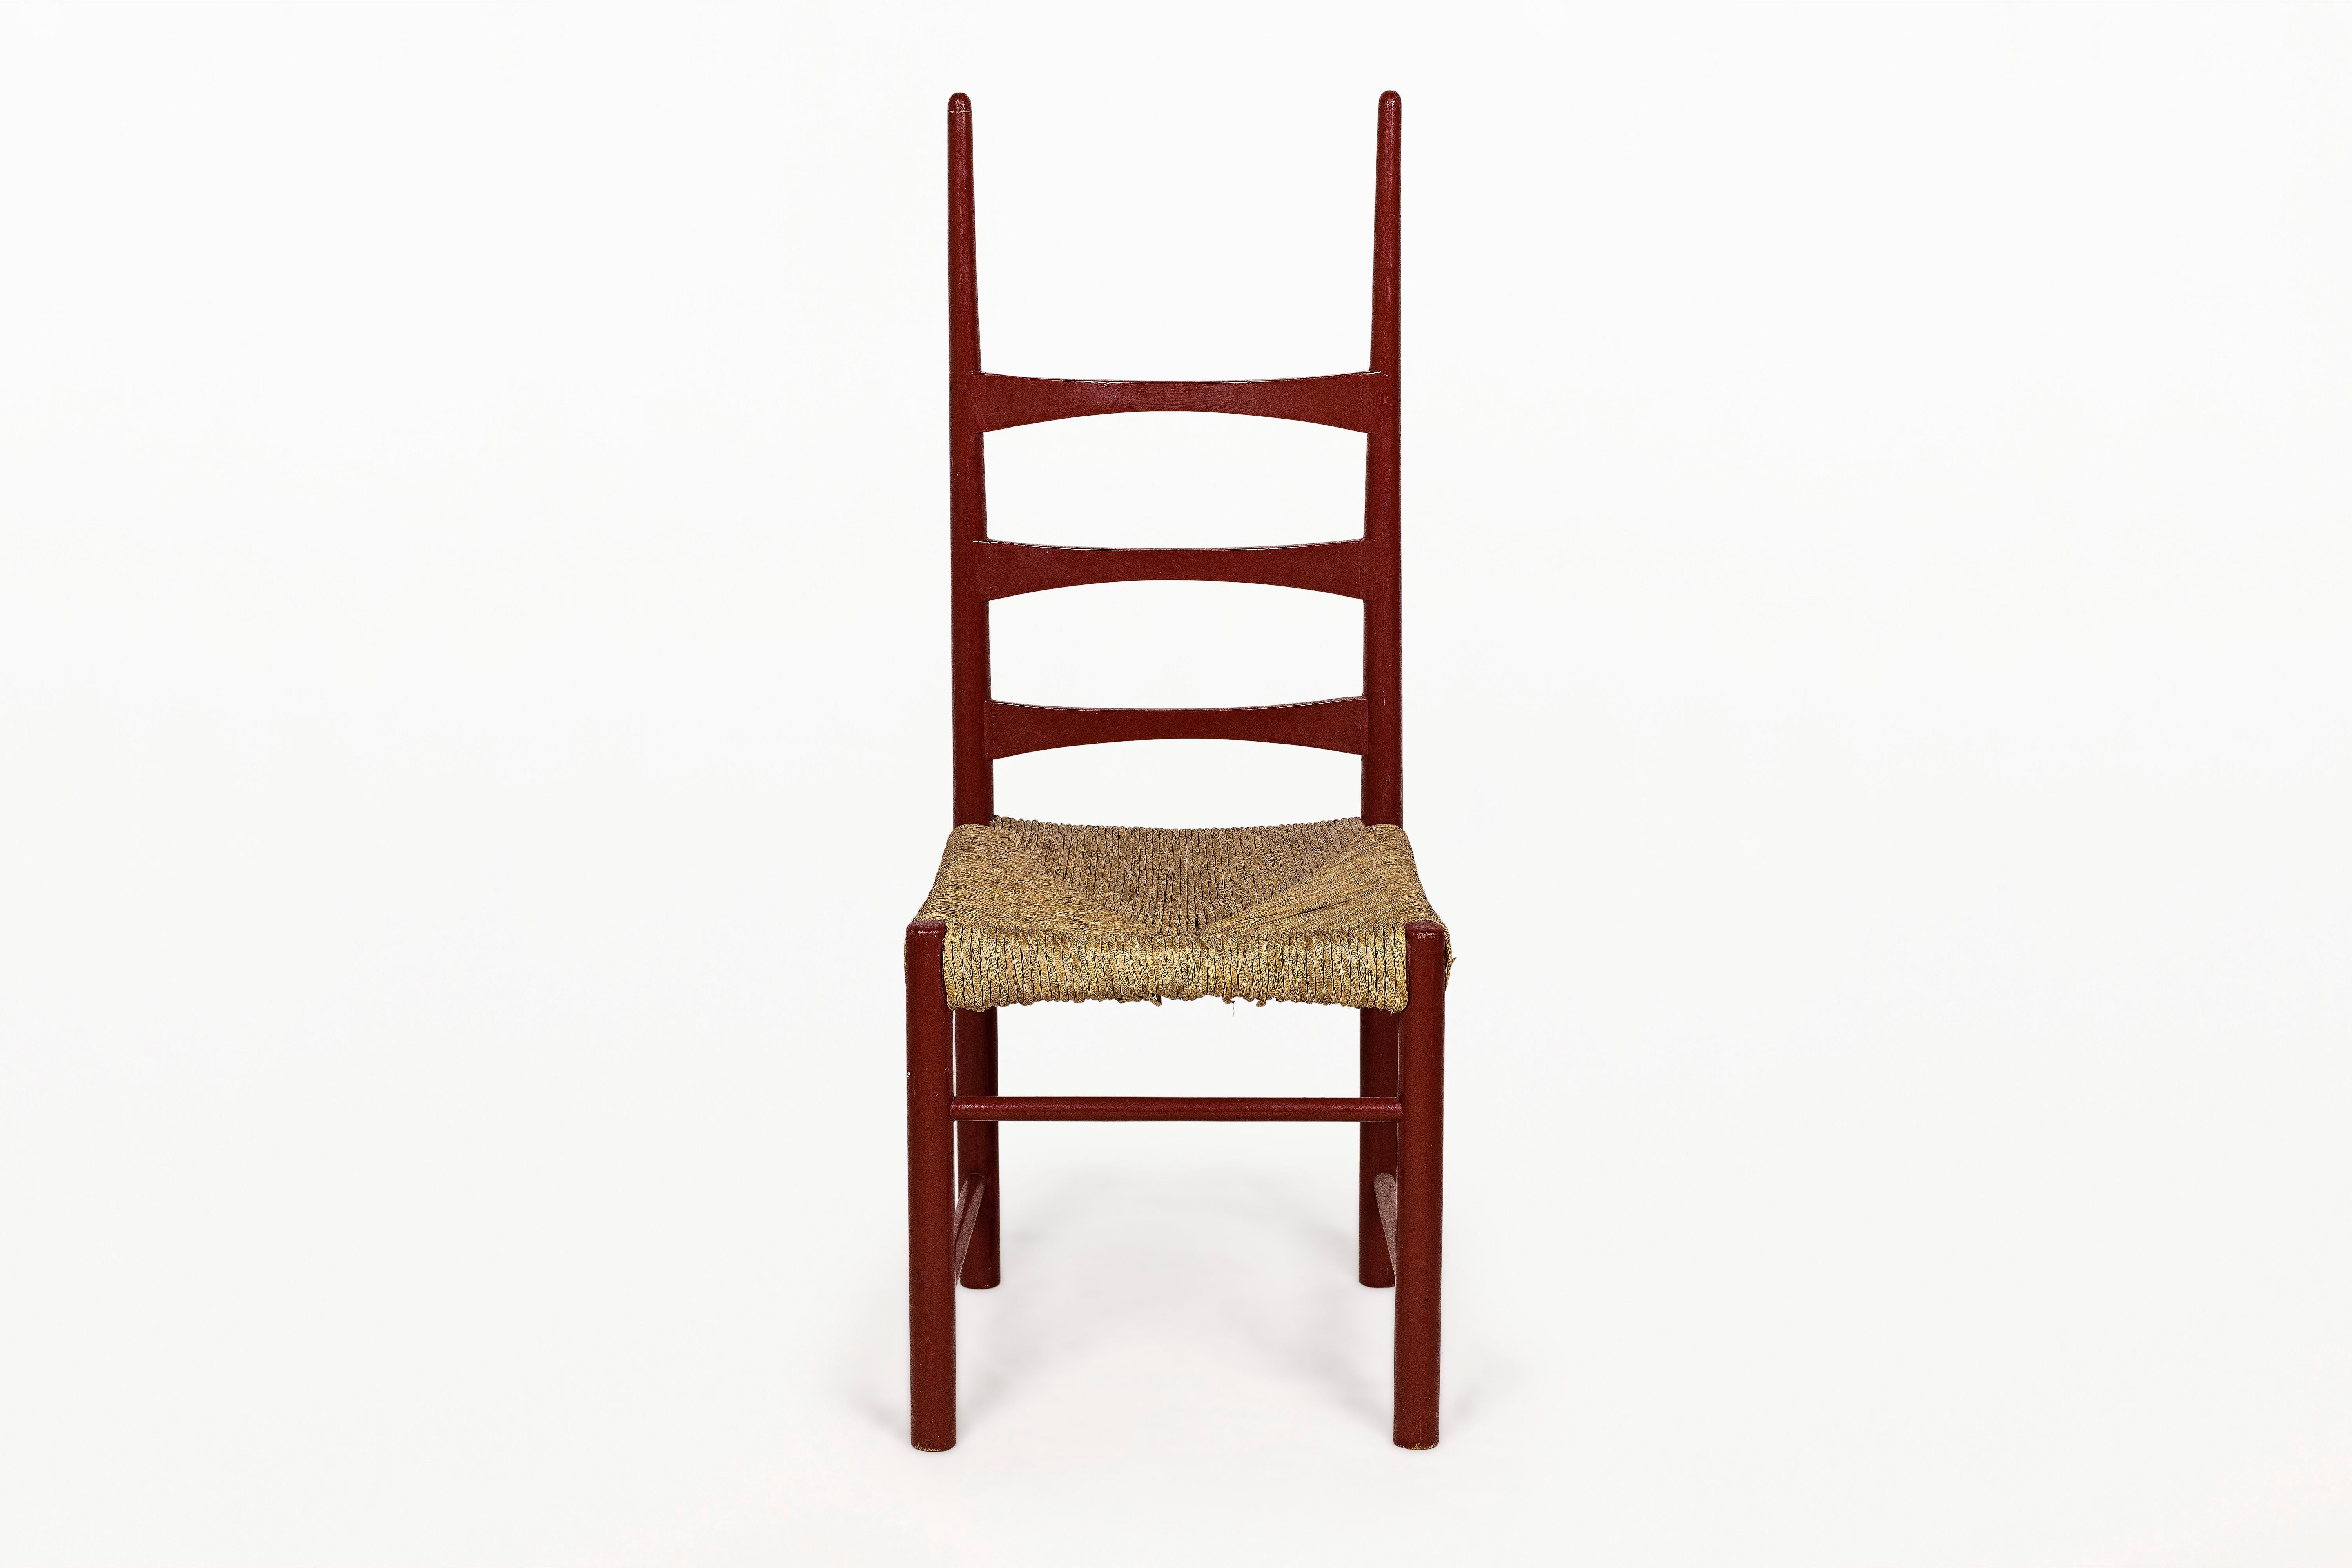 Jordi Vilanova (1925-1998), Set of 6 chairs,
Model 